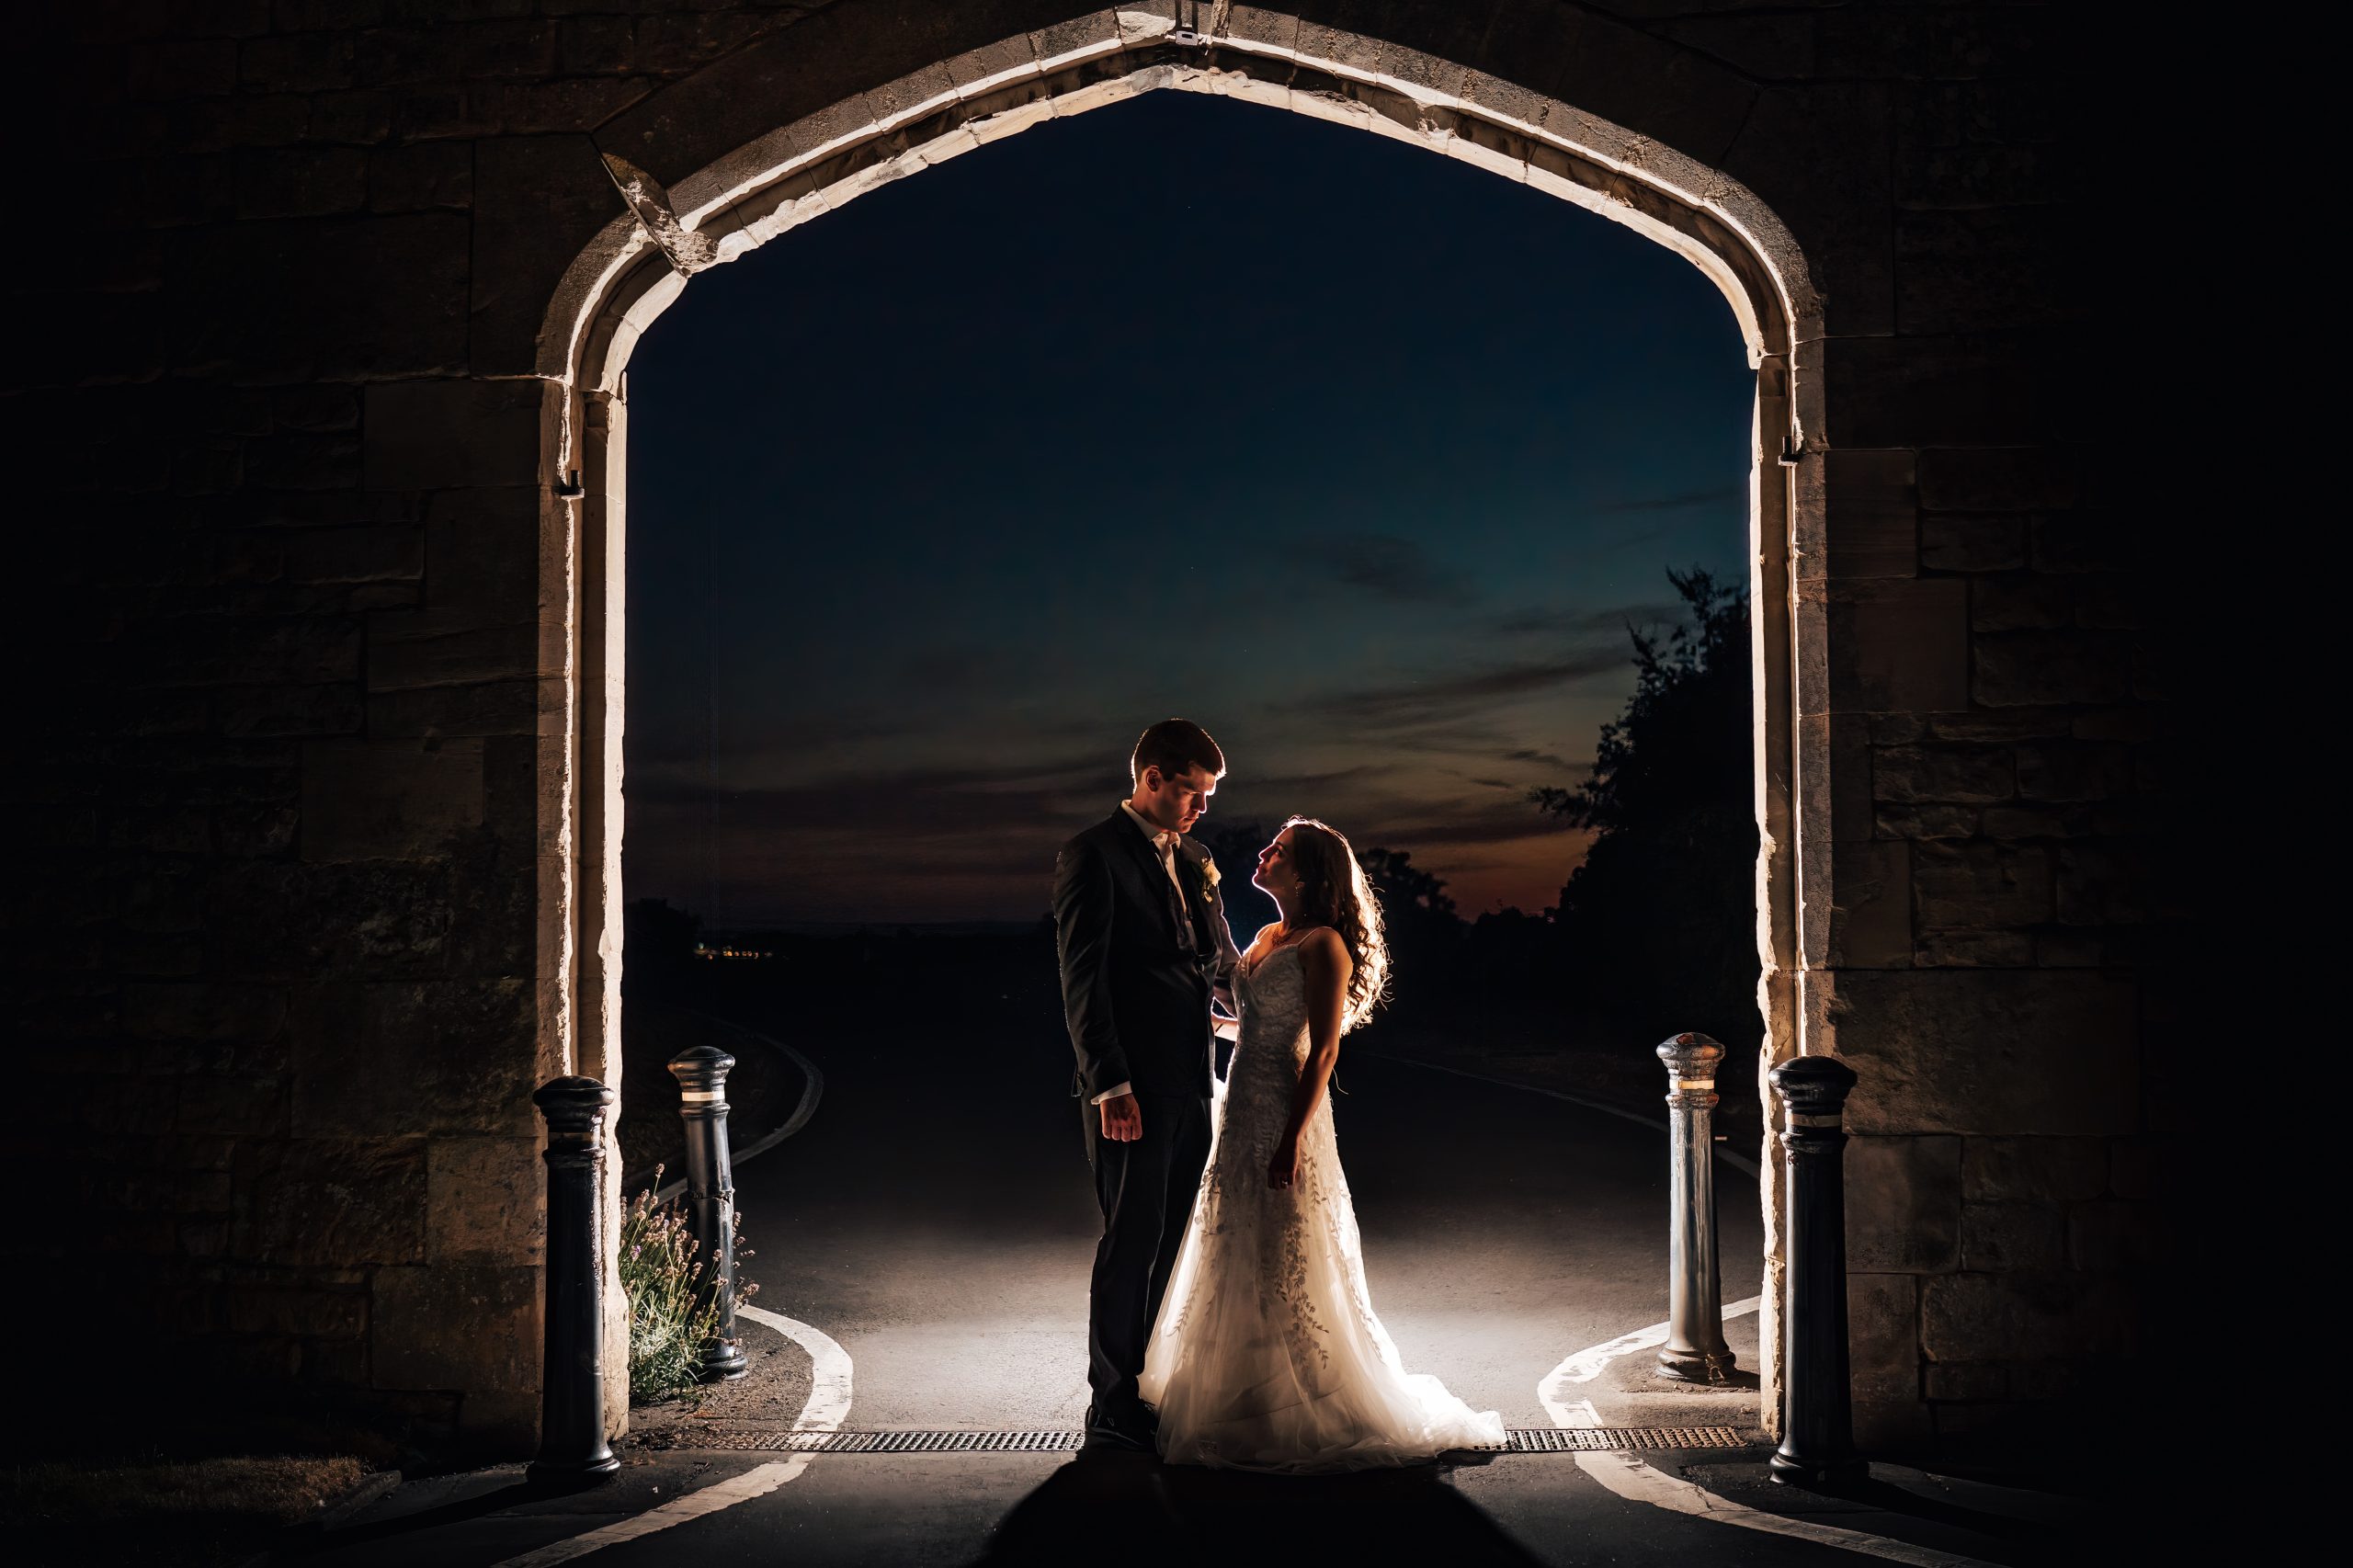 Creative lighting for this wedding couple portrait using flash lighting in the dark. Captured by wedding photographer Ellenborough Park Hotel